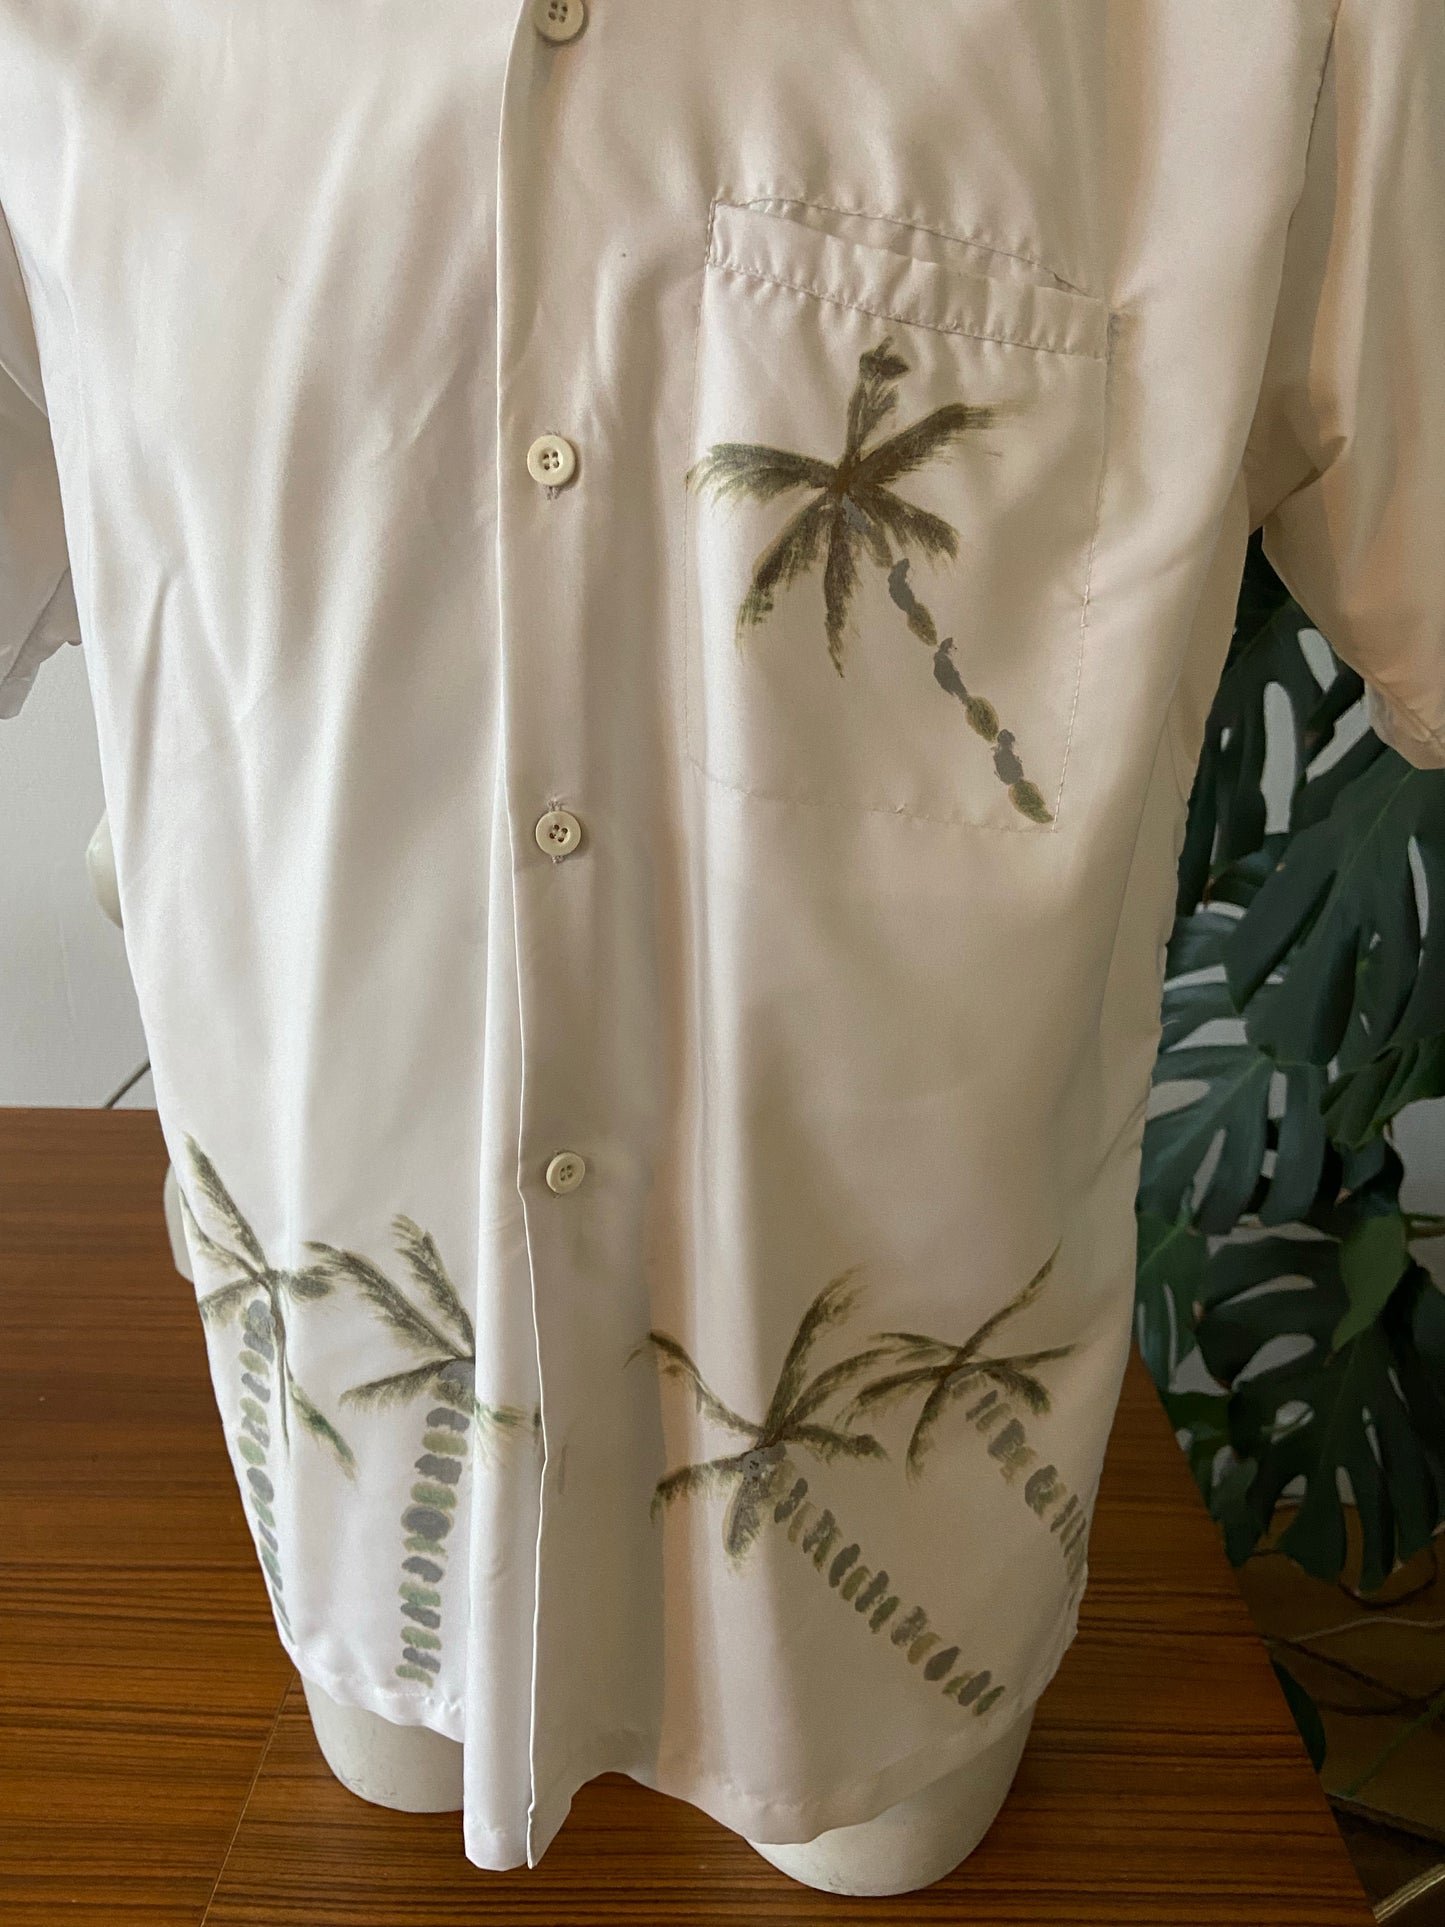 Palm tree shirt